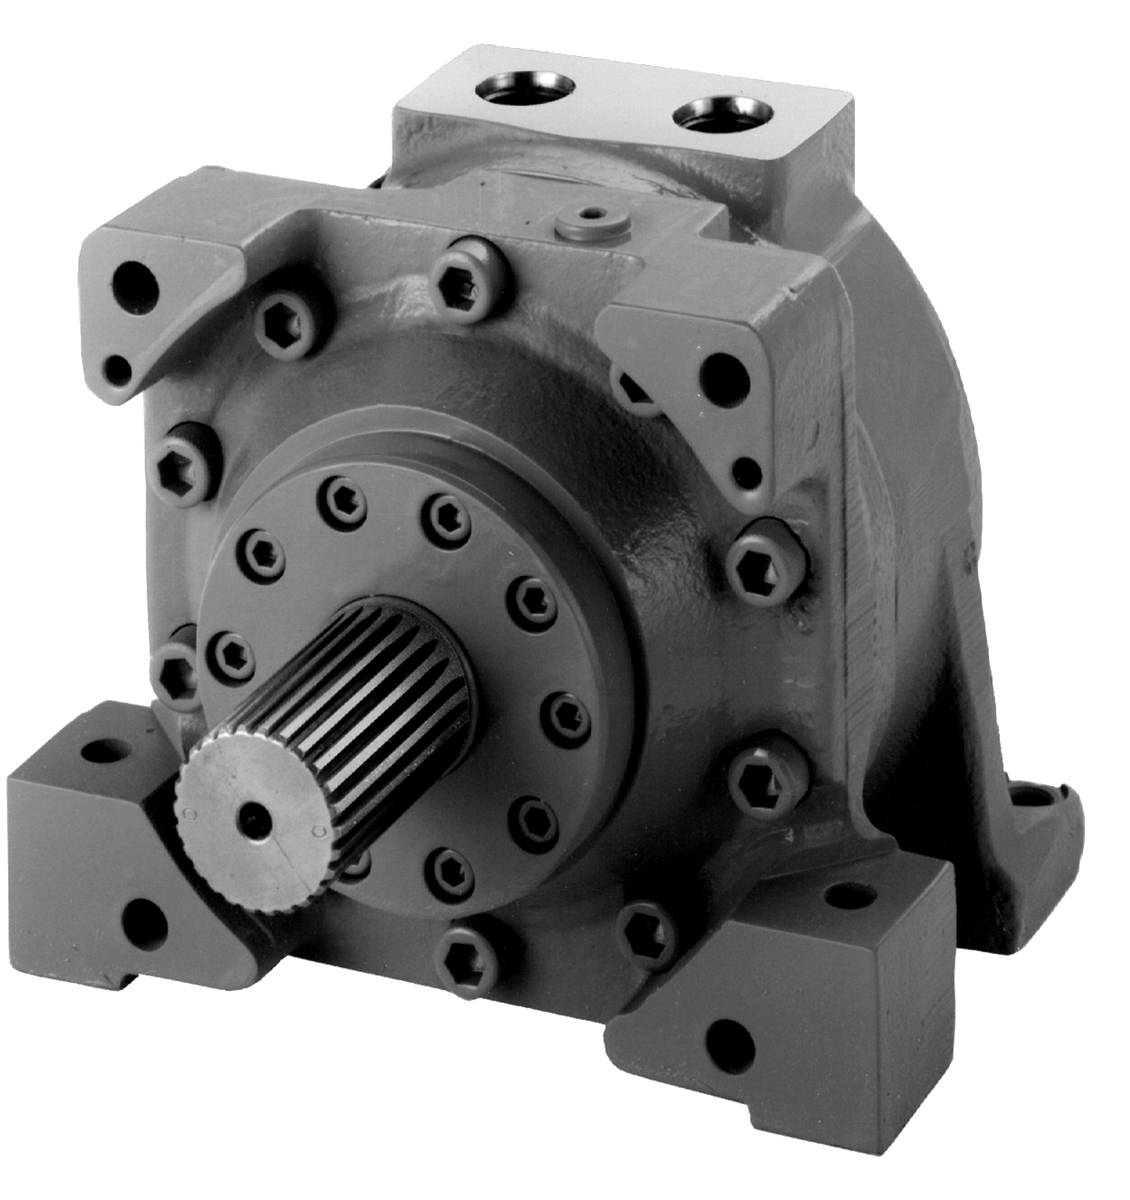 Hydraulic rotary actuator series 26R